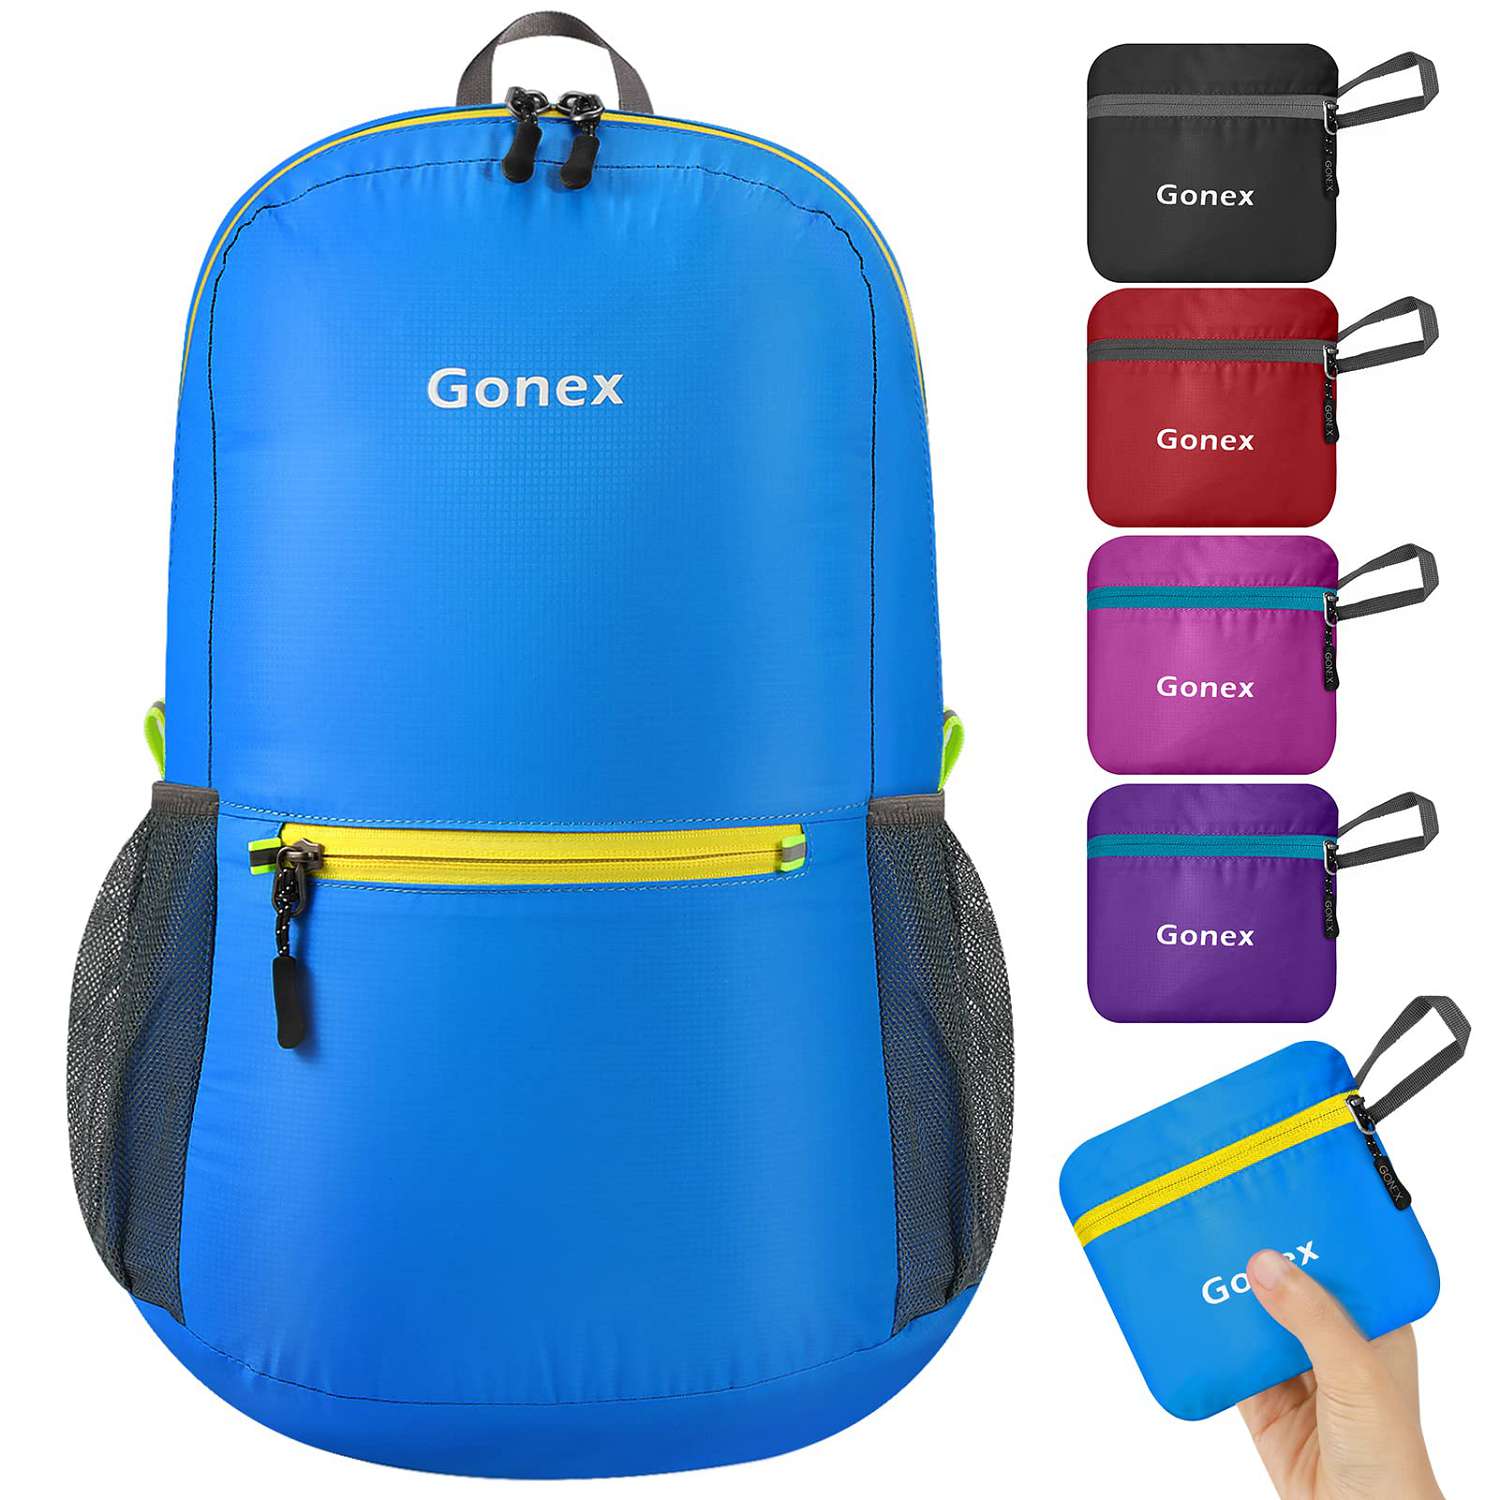 Gonex 20L Lightweight Packable Hiking Backpack Handy Daypack